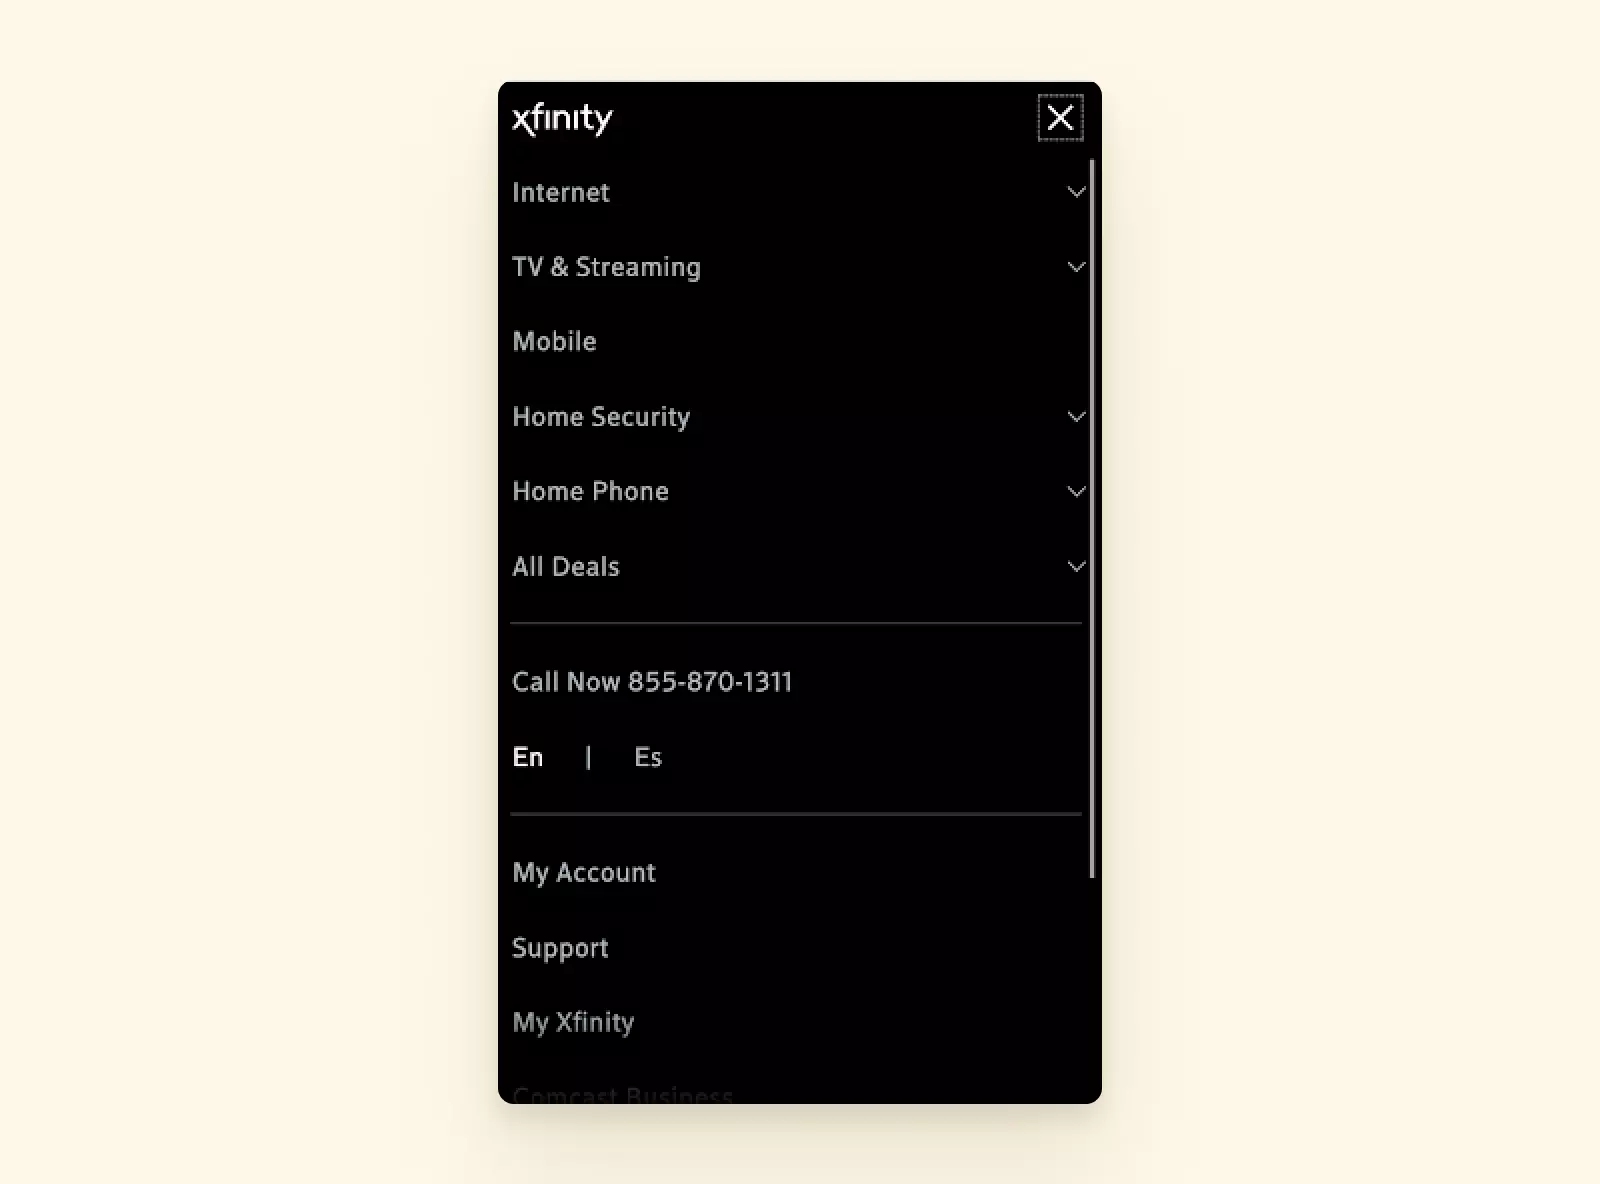 Xfinity settings on mobile